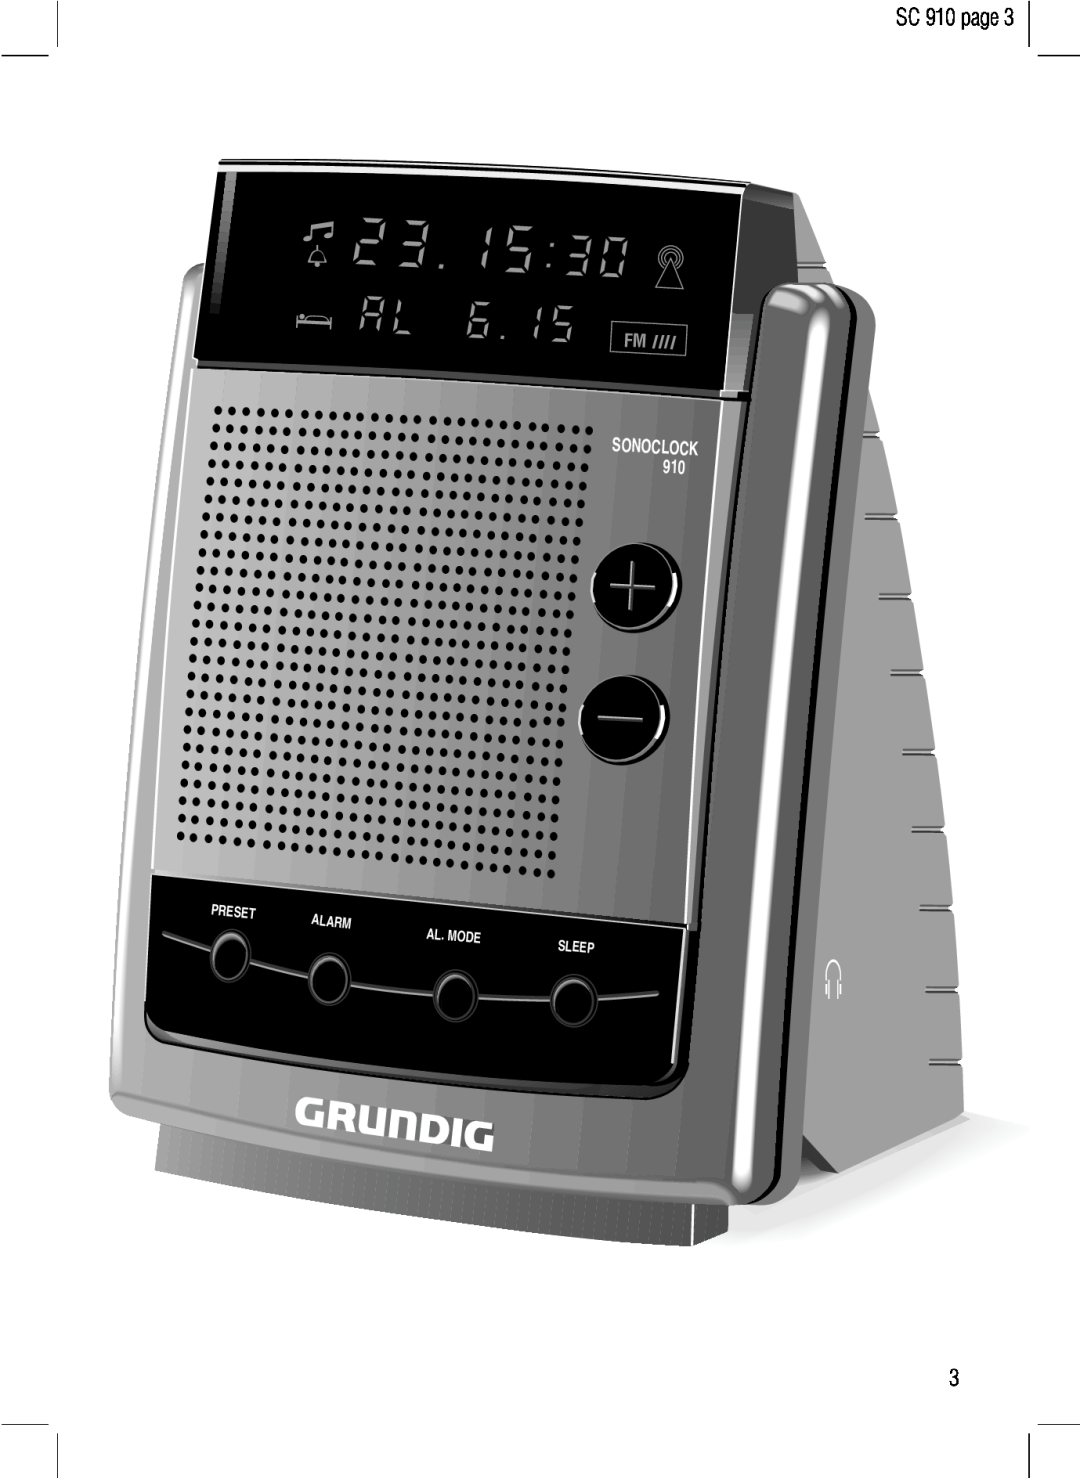 Grundig SC 910 manual Alarm, Preset, Sonoclock Sleep, Al. Mode 